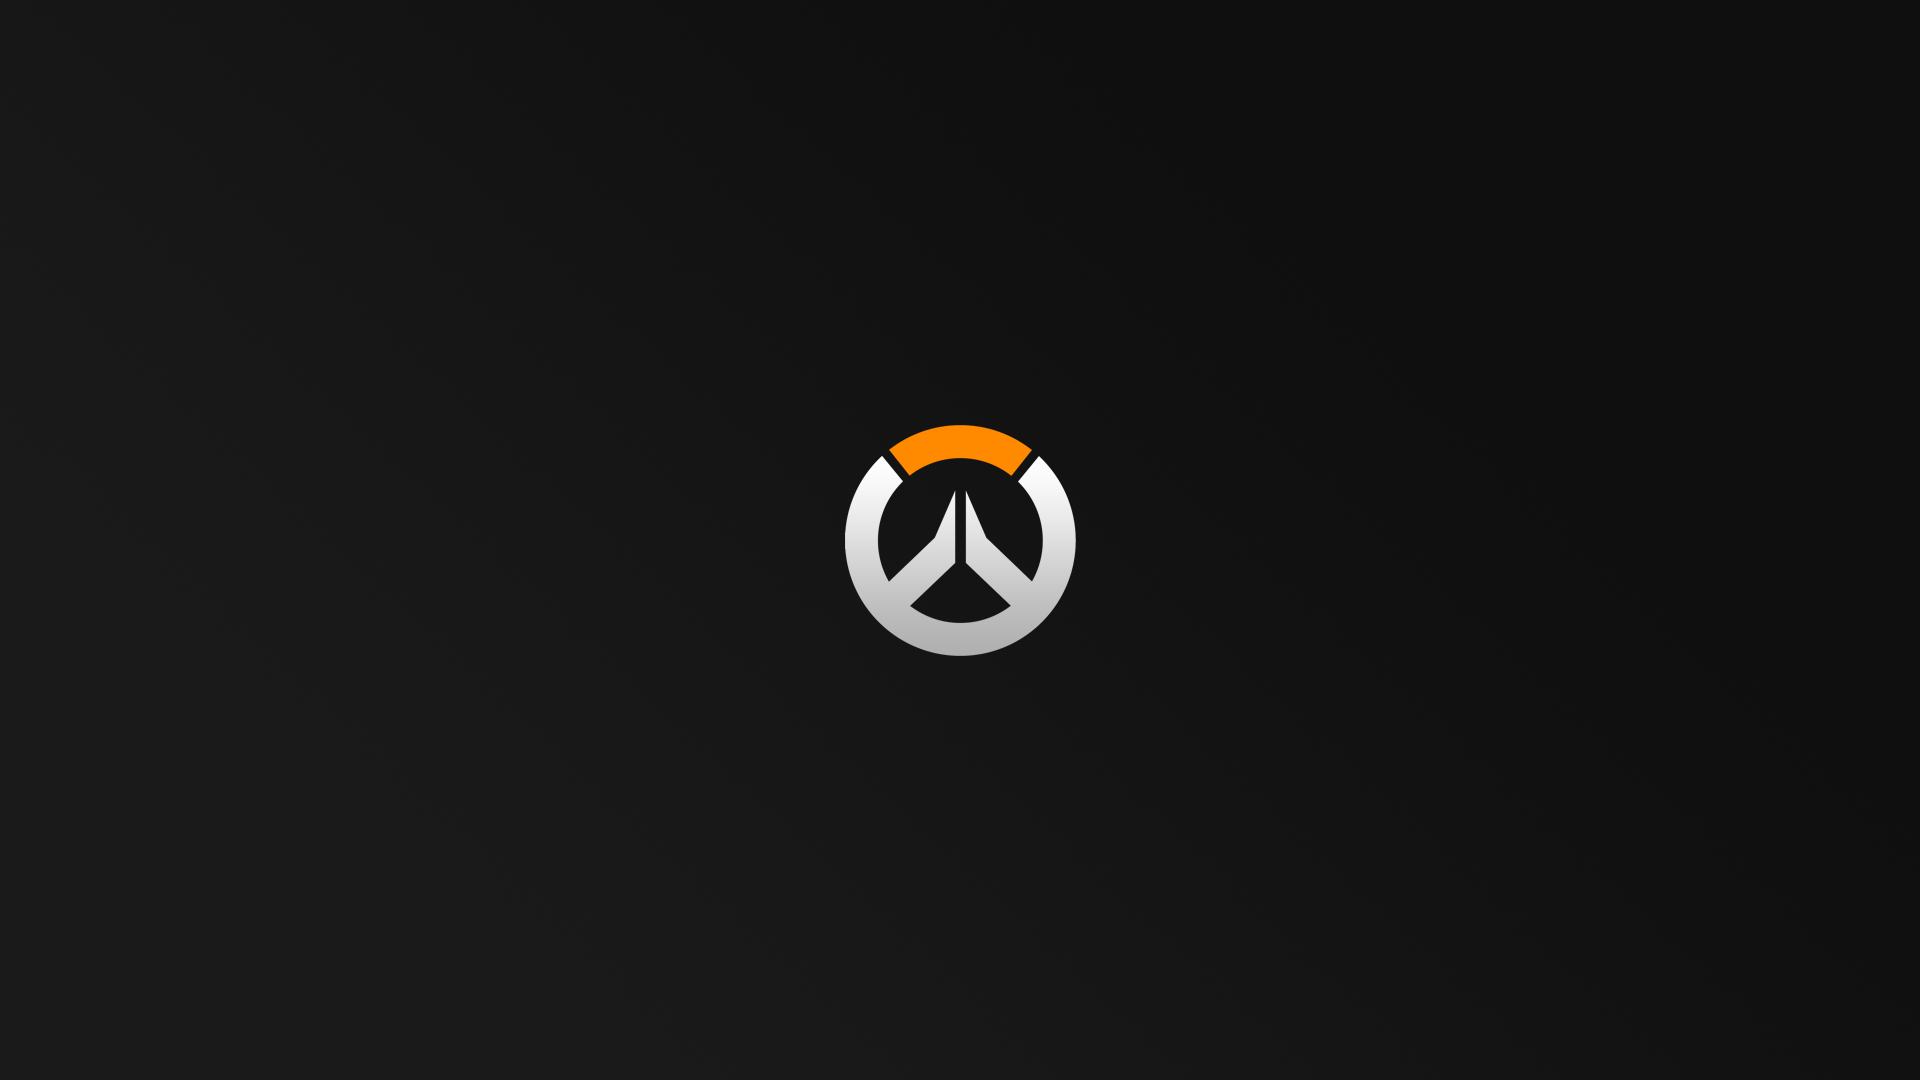 General 1920x1080 video games Overwatch logo black background minimalism simple background Blizzard Entertainment